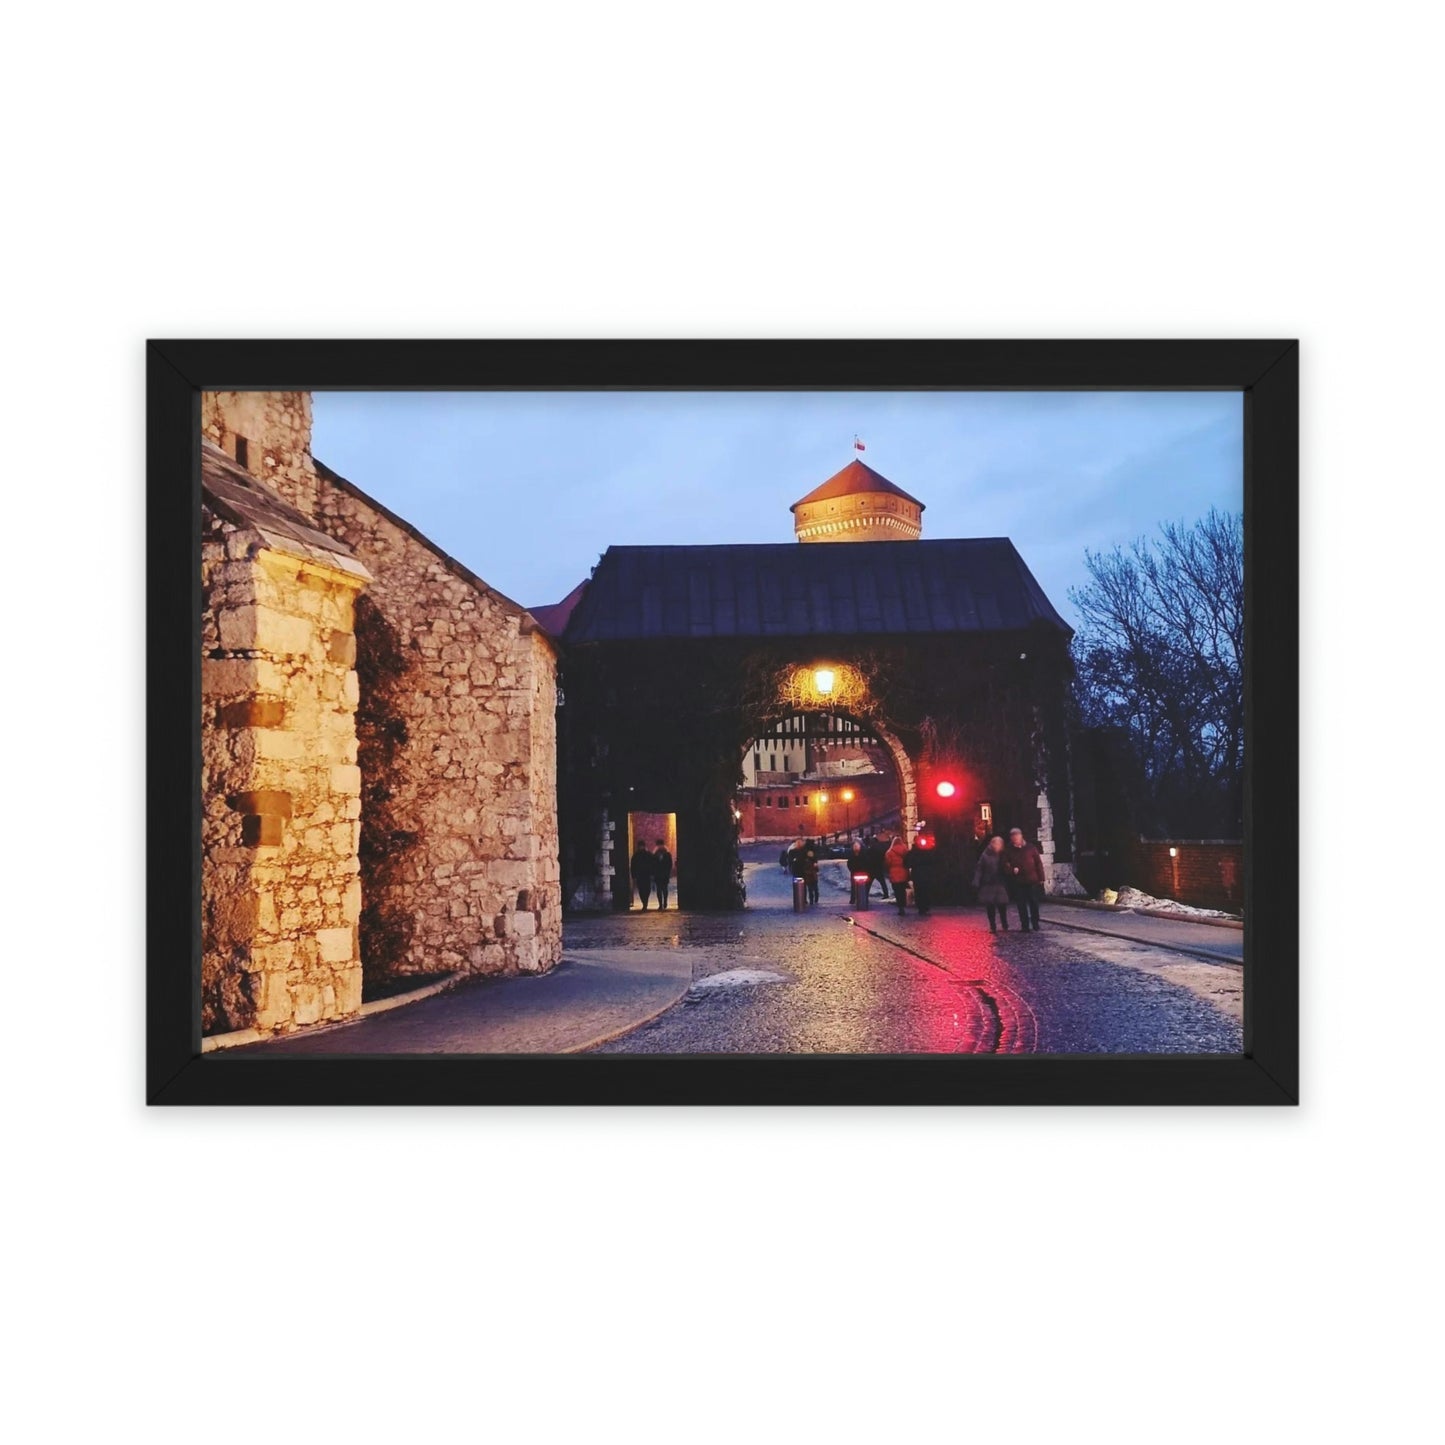 Wawel Gate | Poland | Framed Poster - All sizes